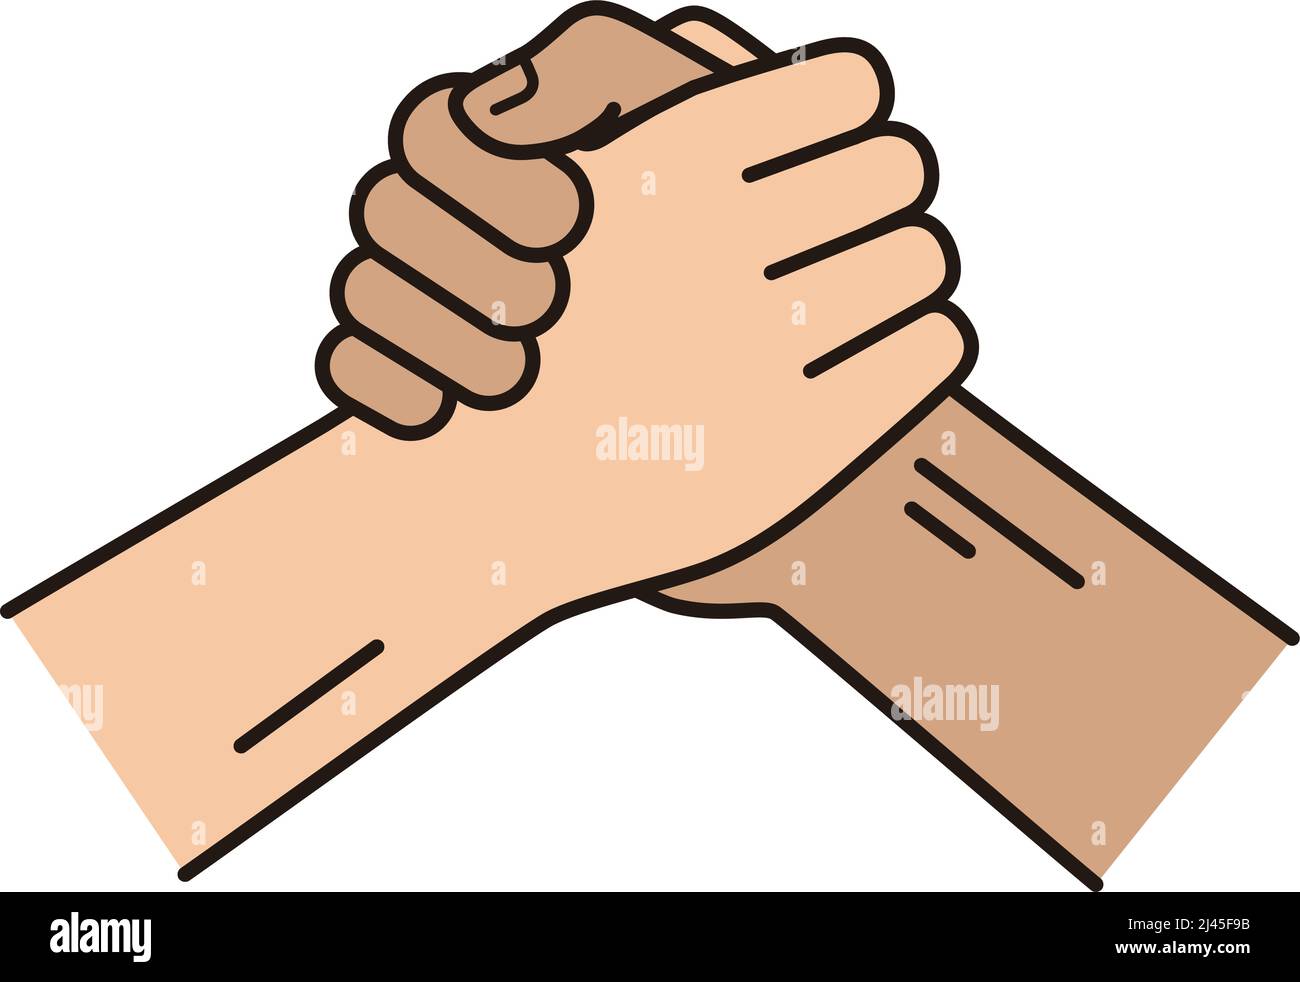 Arm wrestle hands challenge, vector illustration Stock Vector